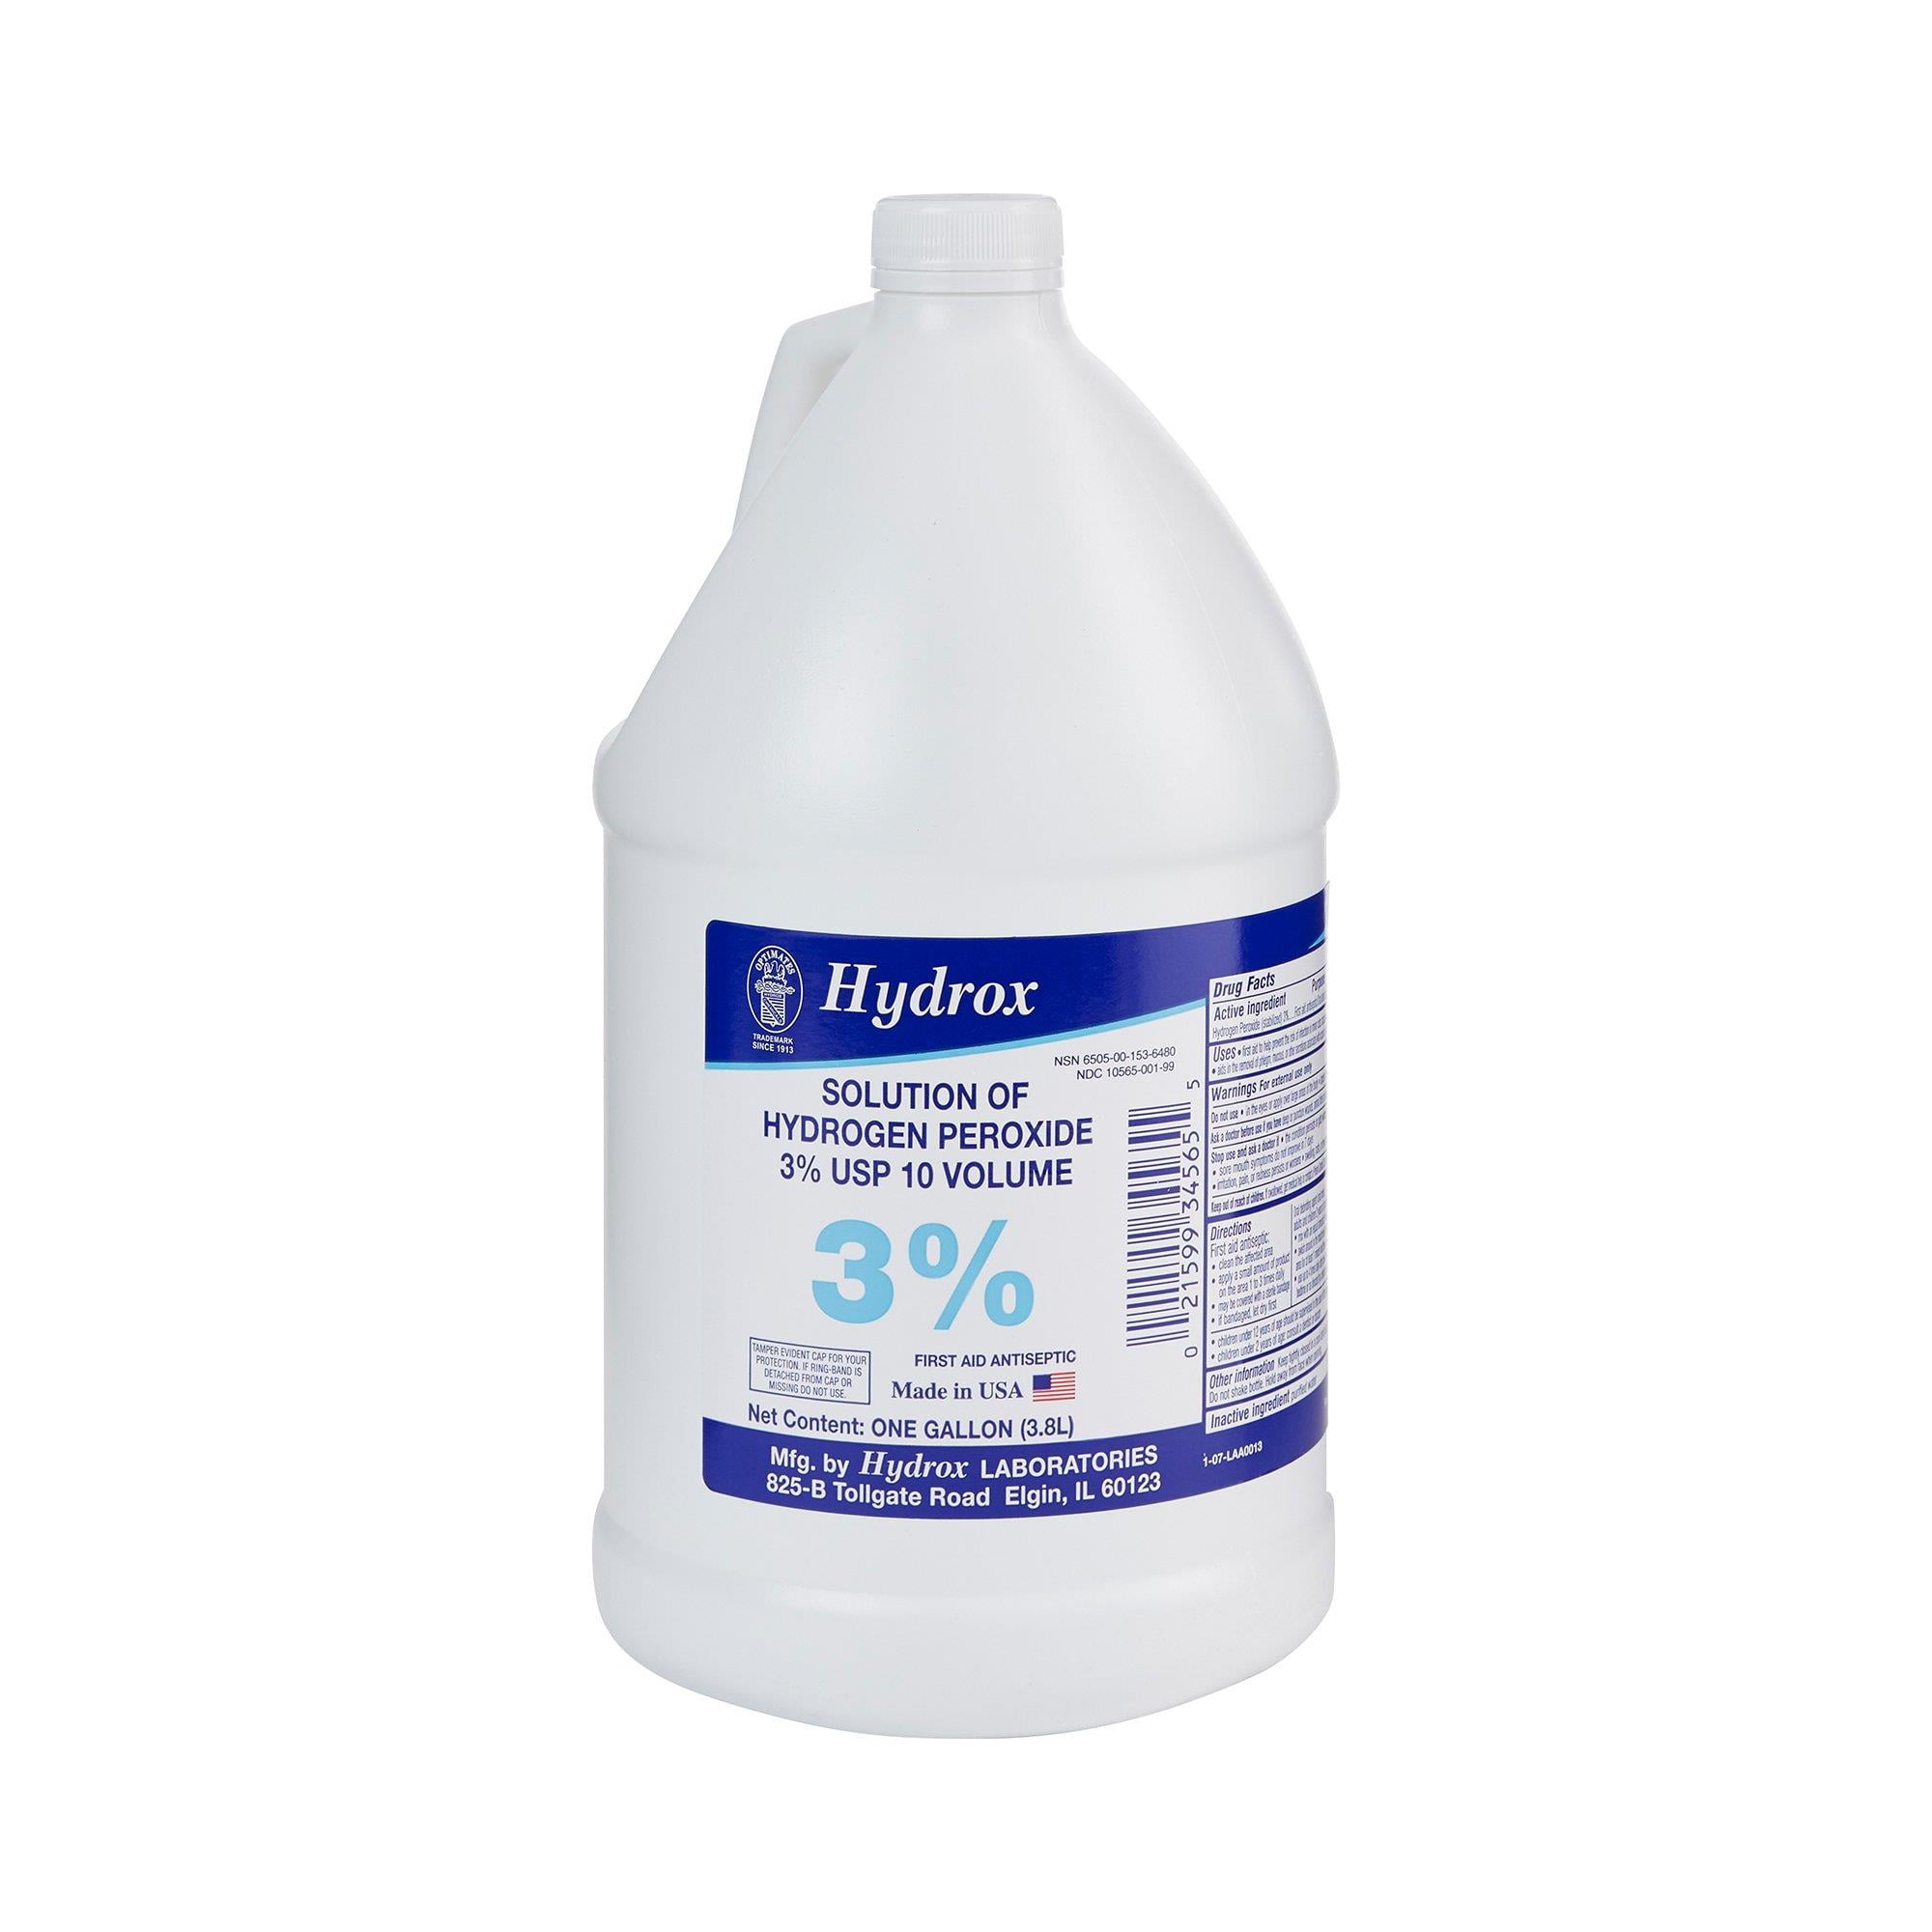 Hydrogen Peroxide 34% Solution, Lab Grade